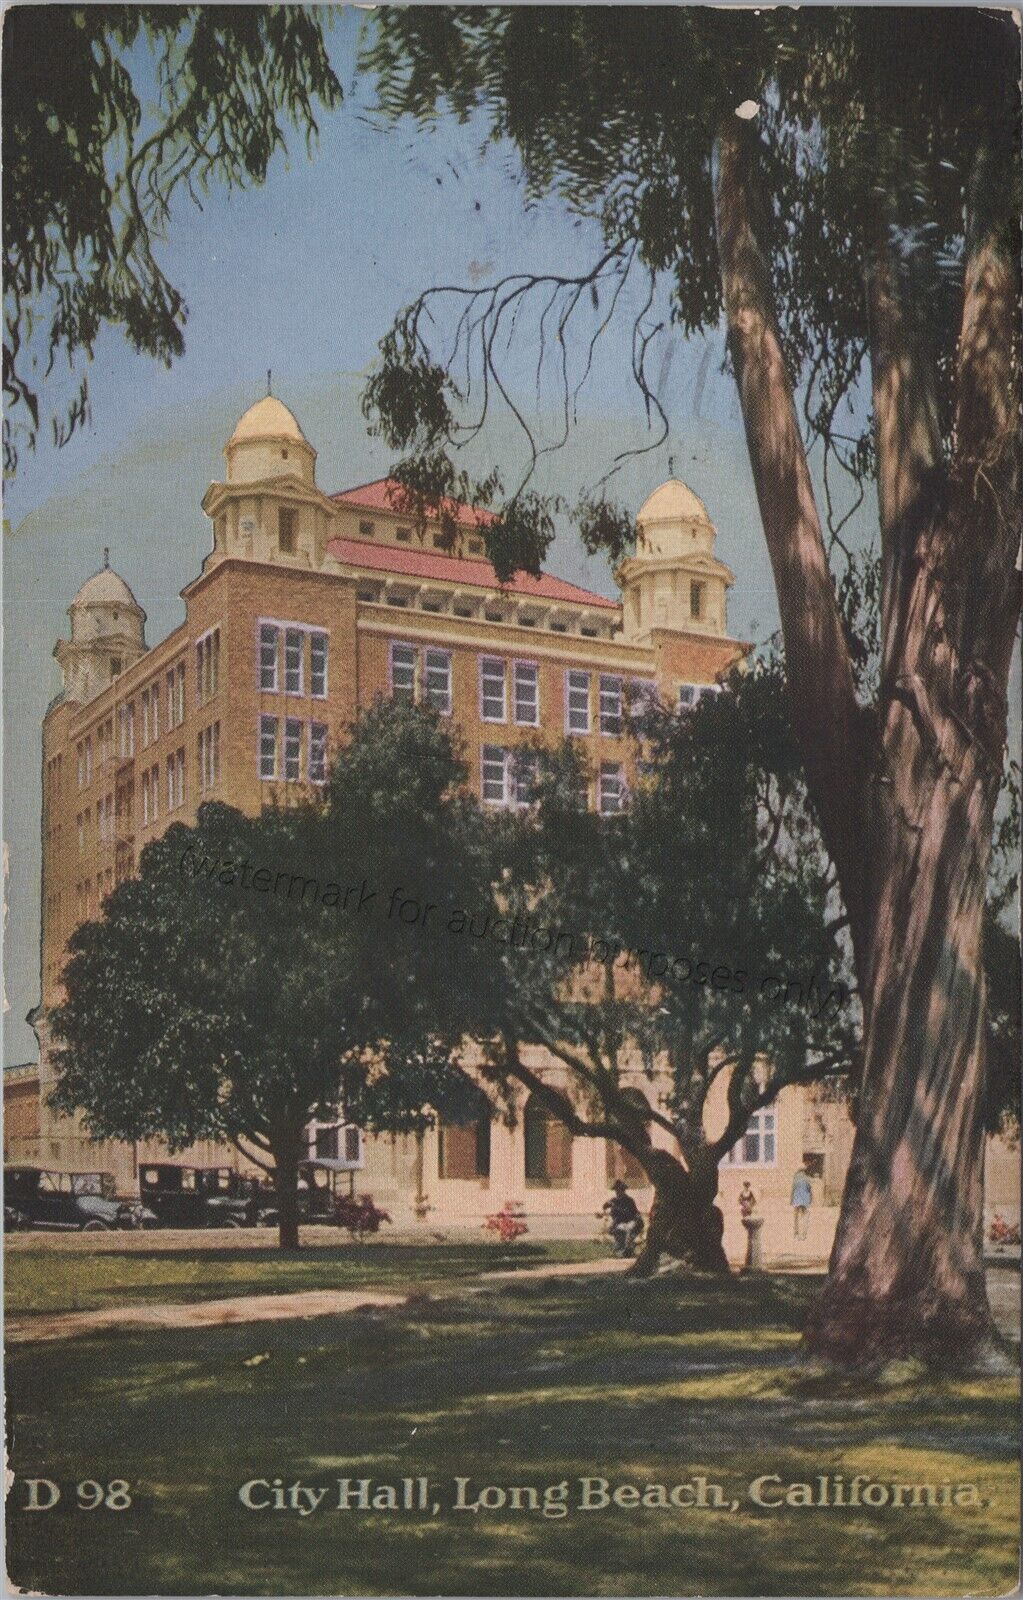 Long Beach, CA: 1929 City Hall - Vintage Los Angeles Co California Postcard